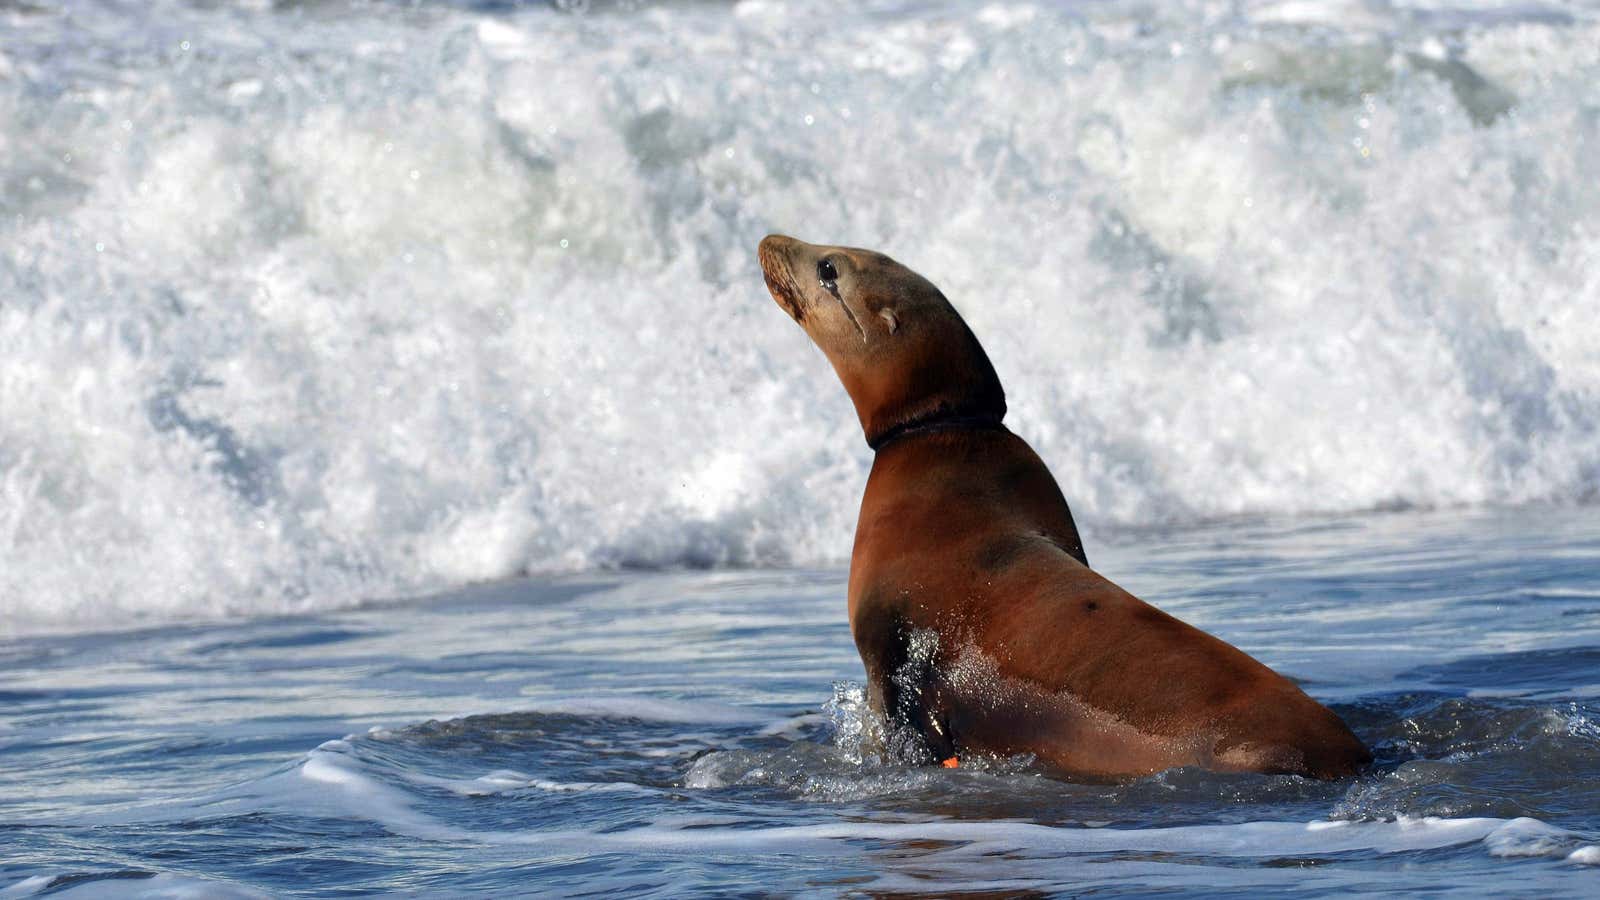 Micro-plastics can poison big marine mammals.